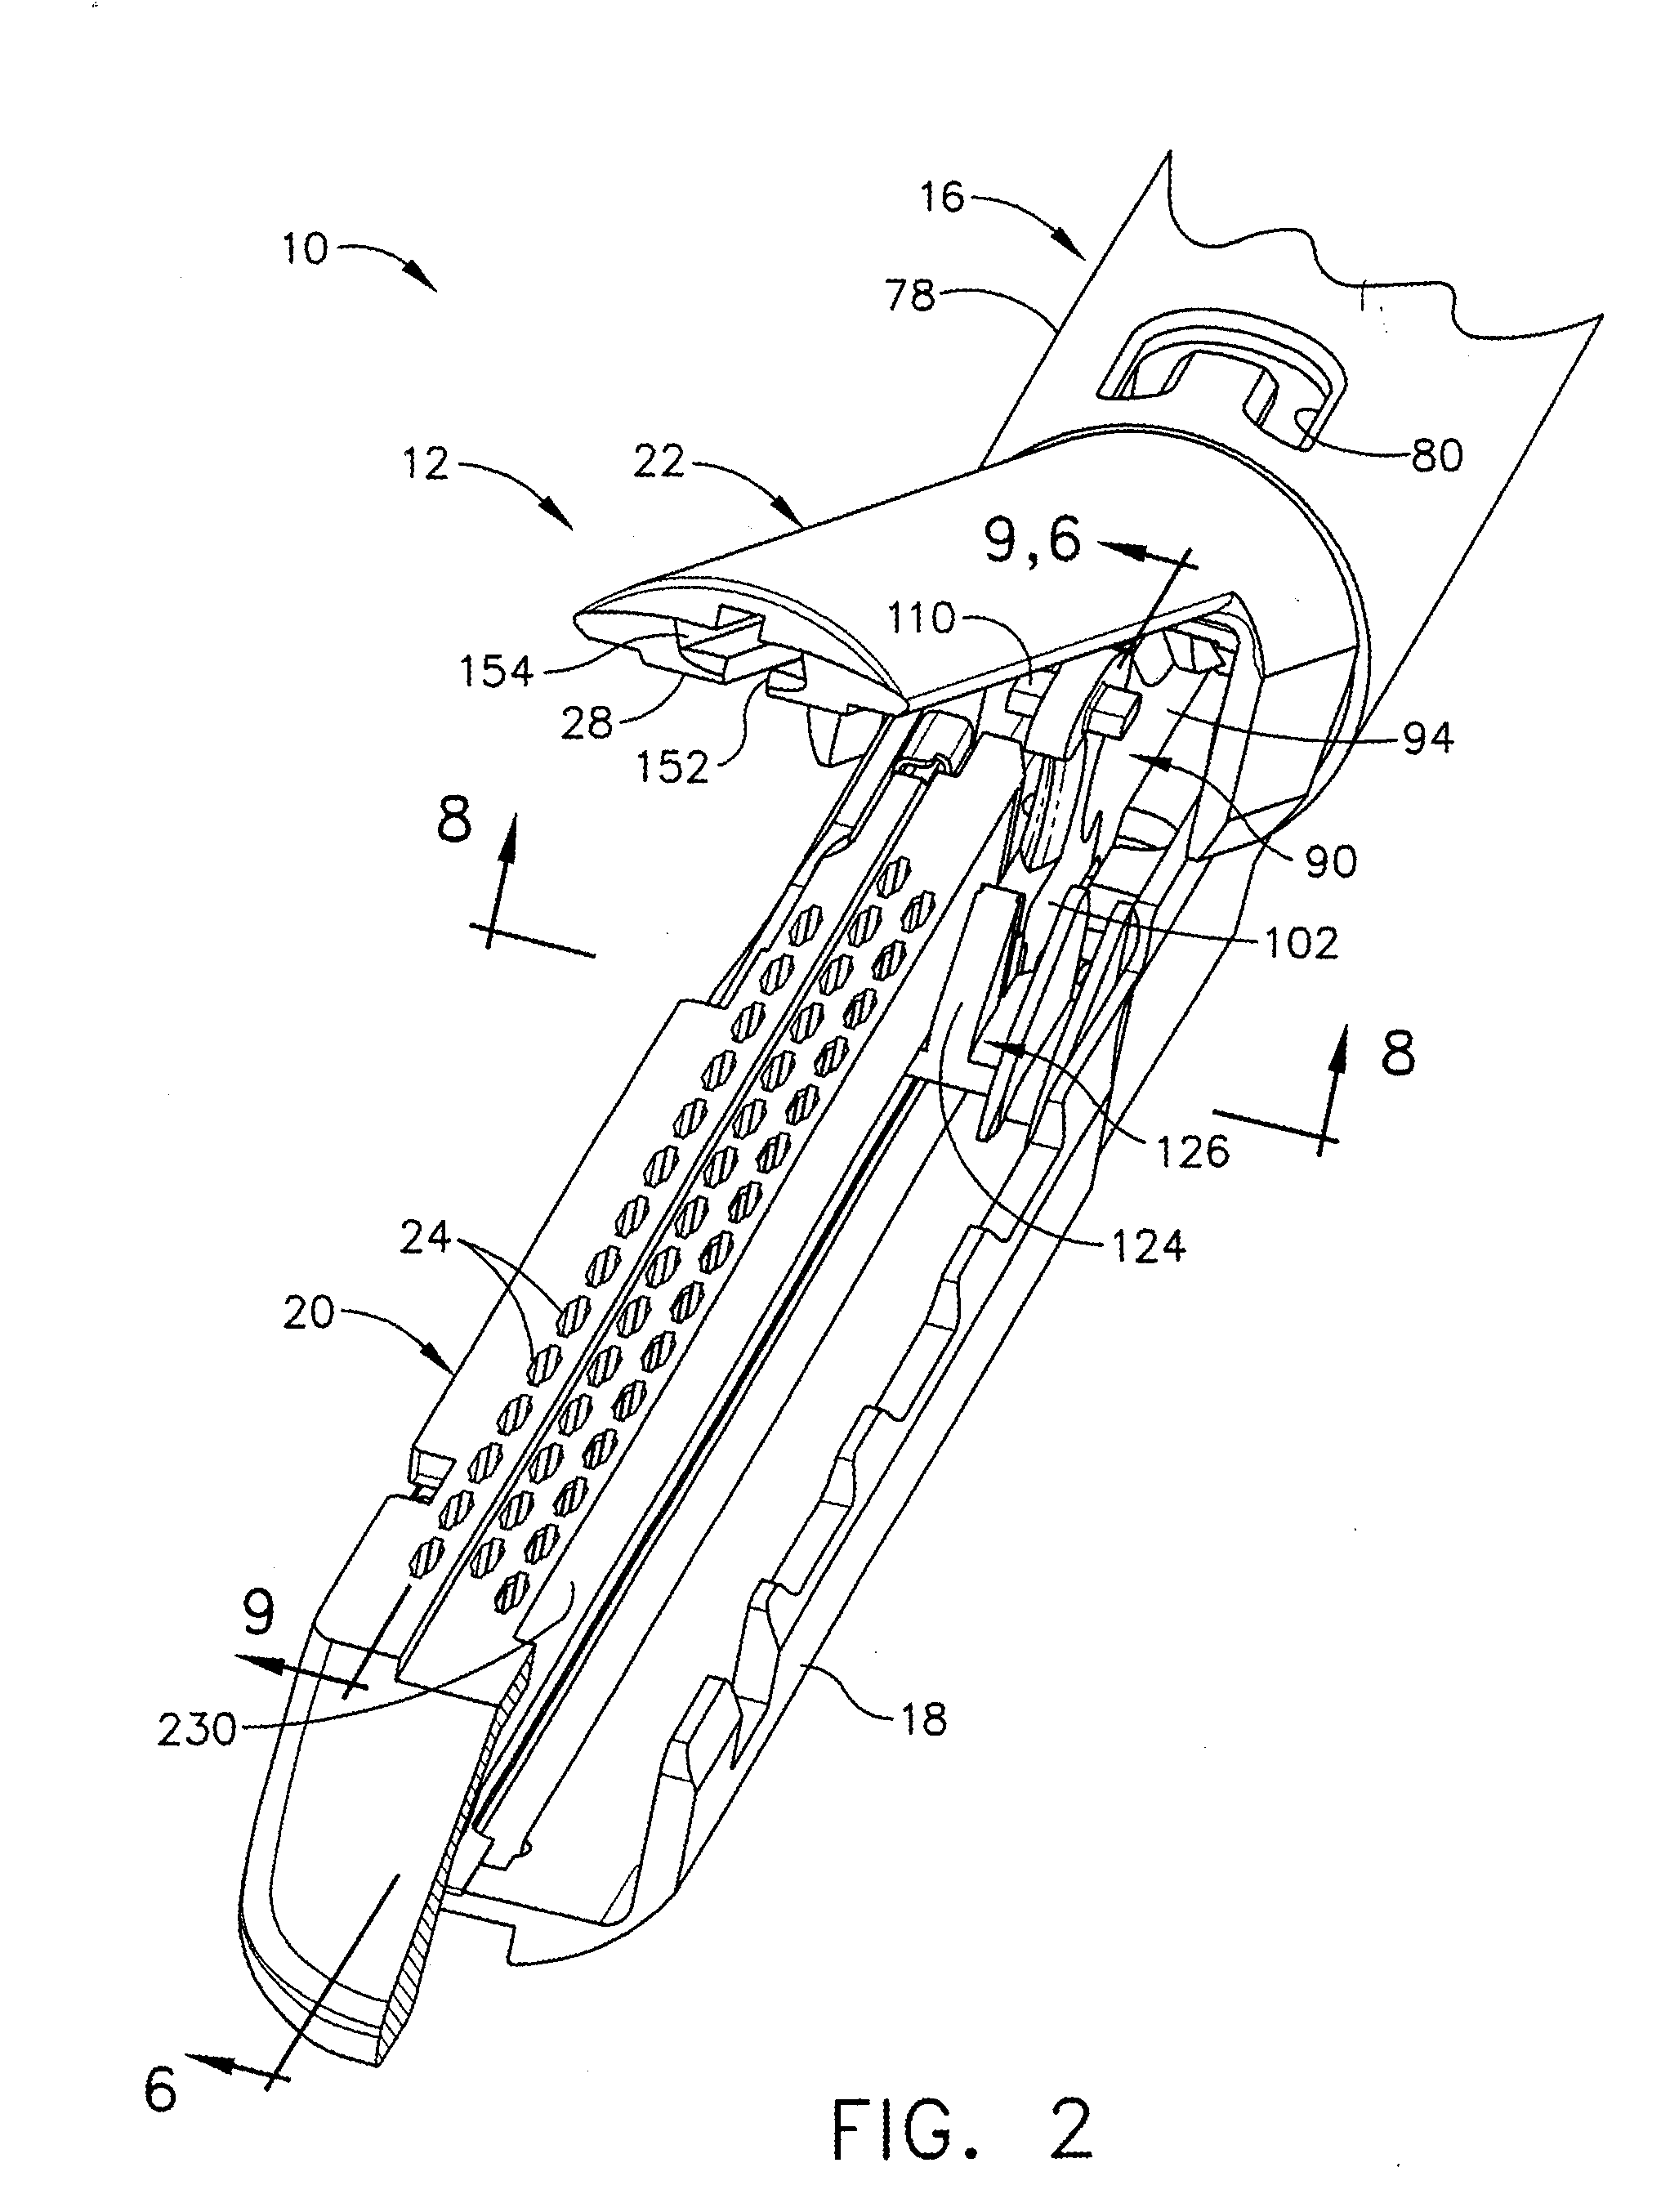 Articulating surgical stapling instrument incorporating a two-piece e-beam firing mechanism